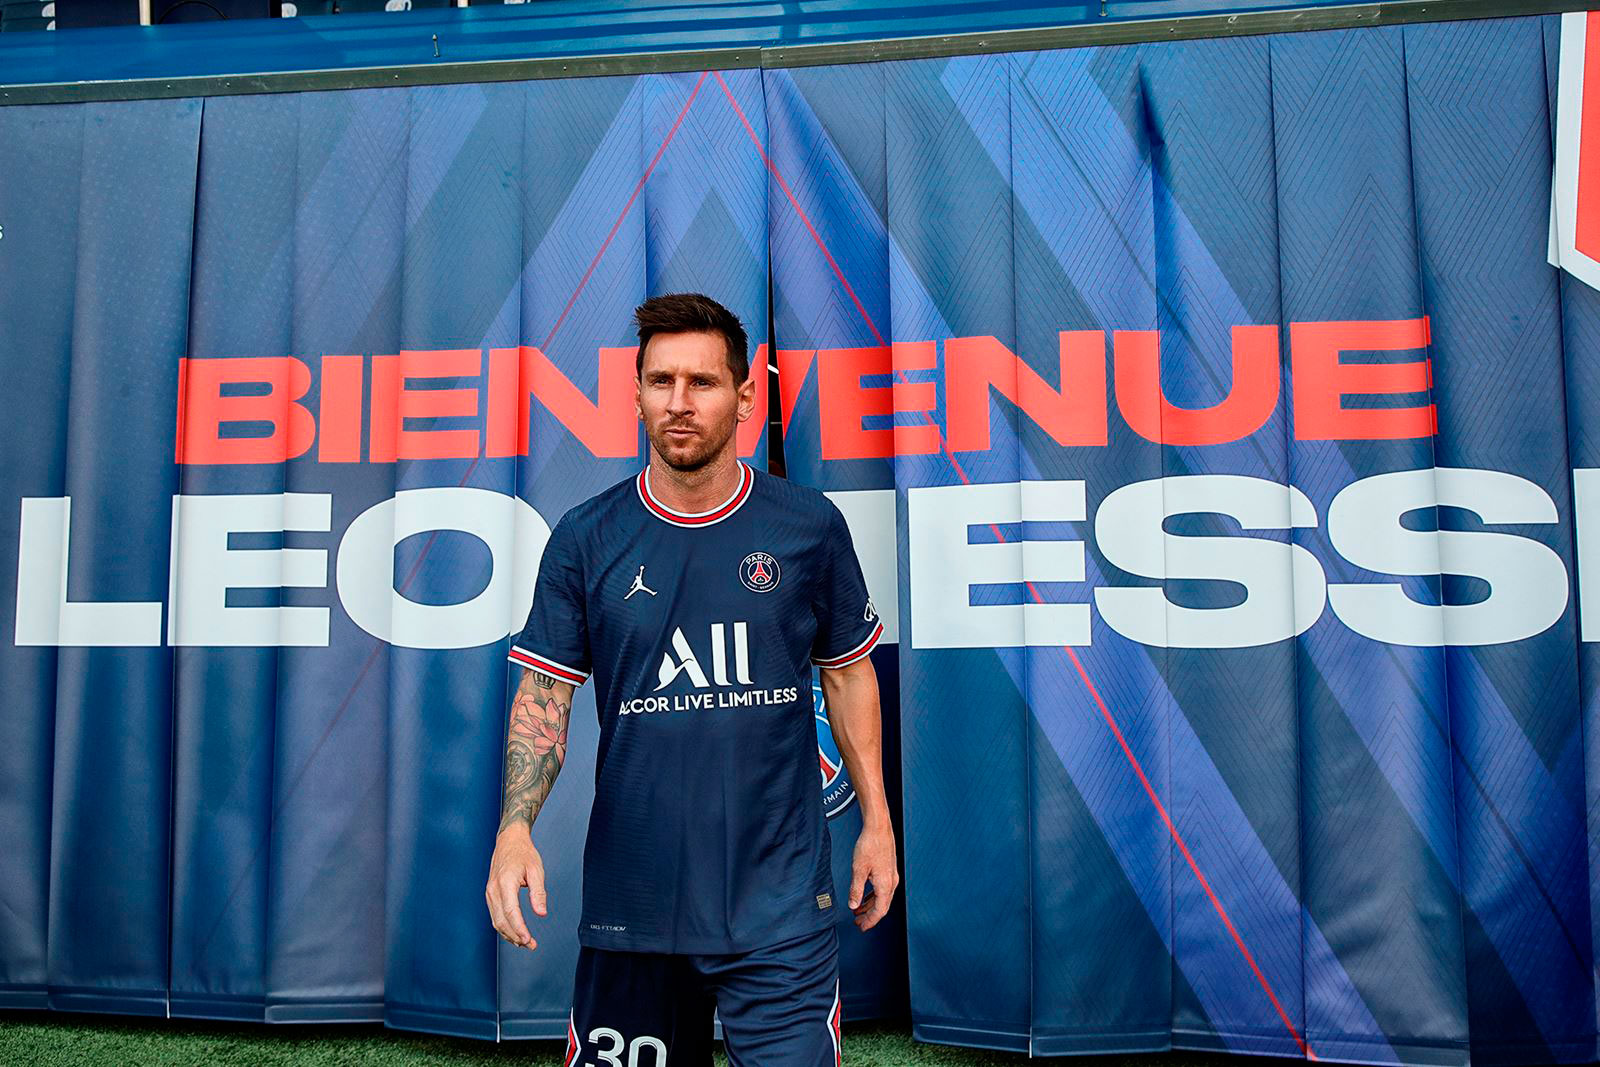 Messi PSG Wallpaper, Welcome Leo Messi